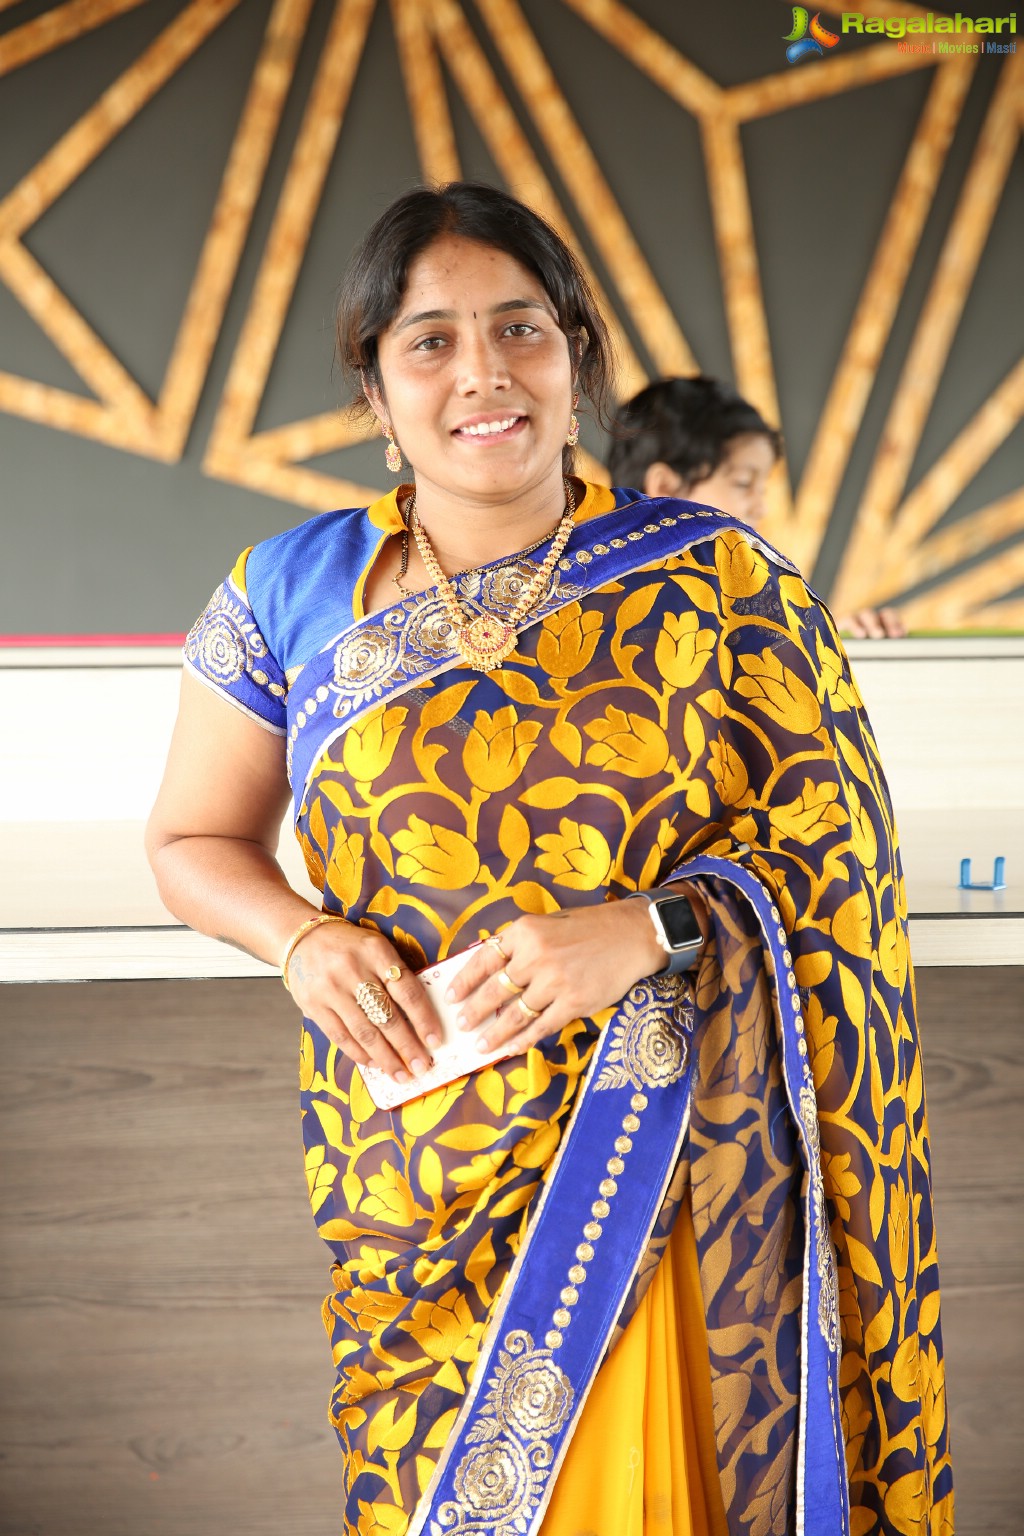 Nandamuri Taraka Ratna launches Food Whale at Skyzone, Gandipet, Hyderabad